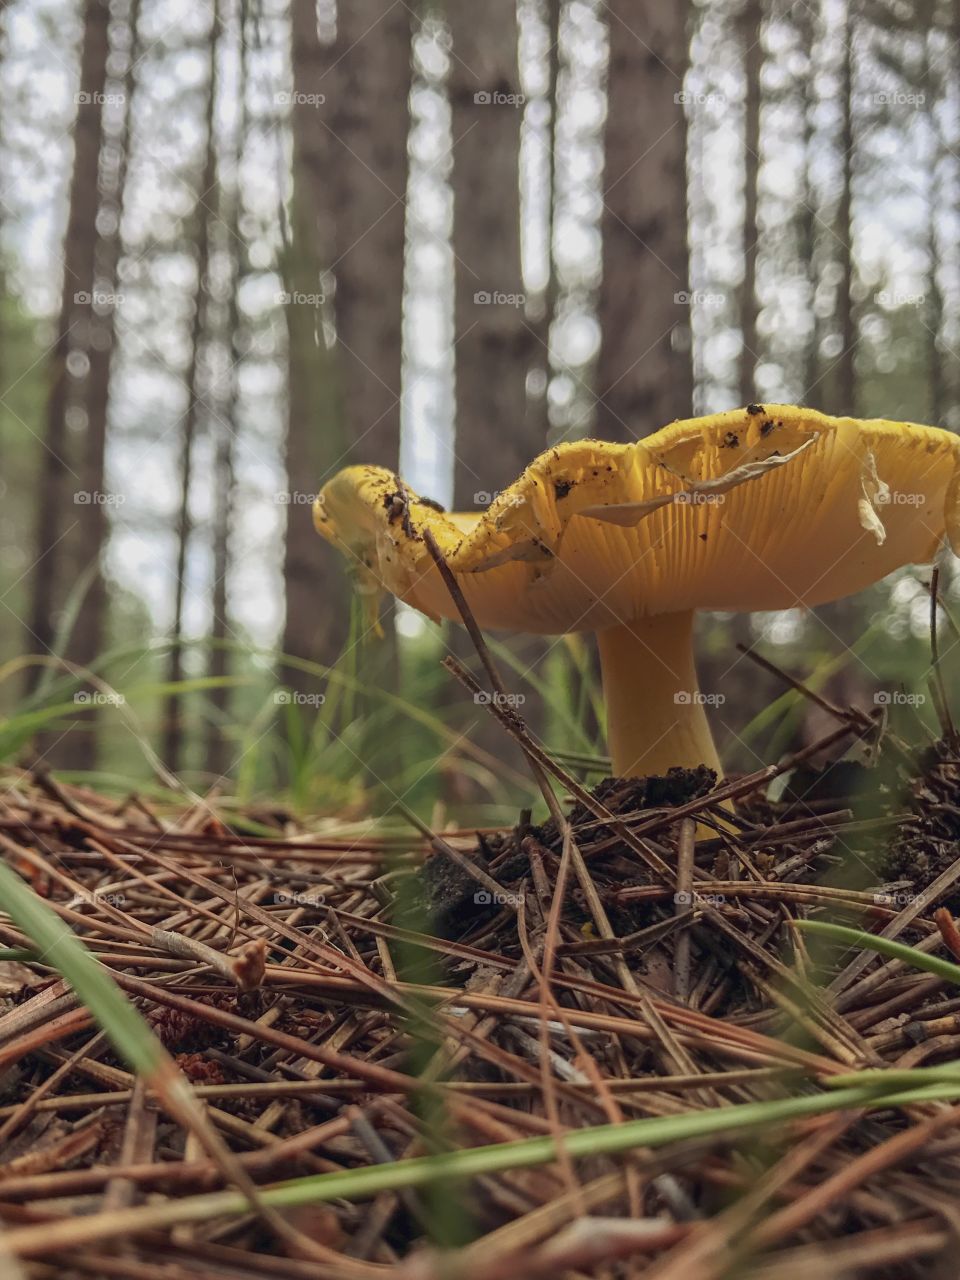 Psychedelic wild mushroom found on nature walk